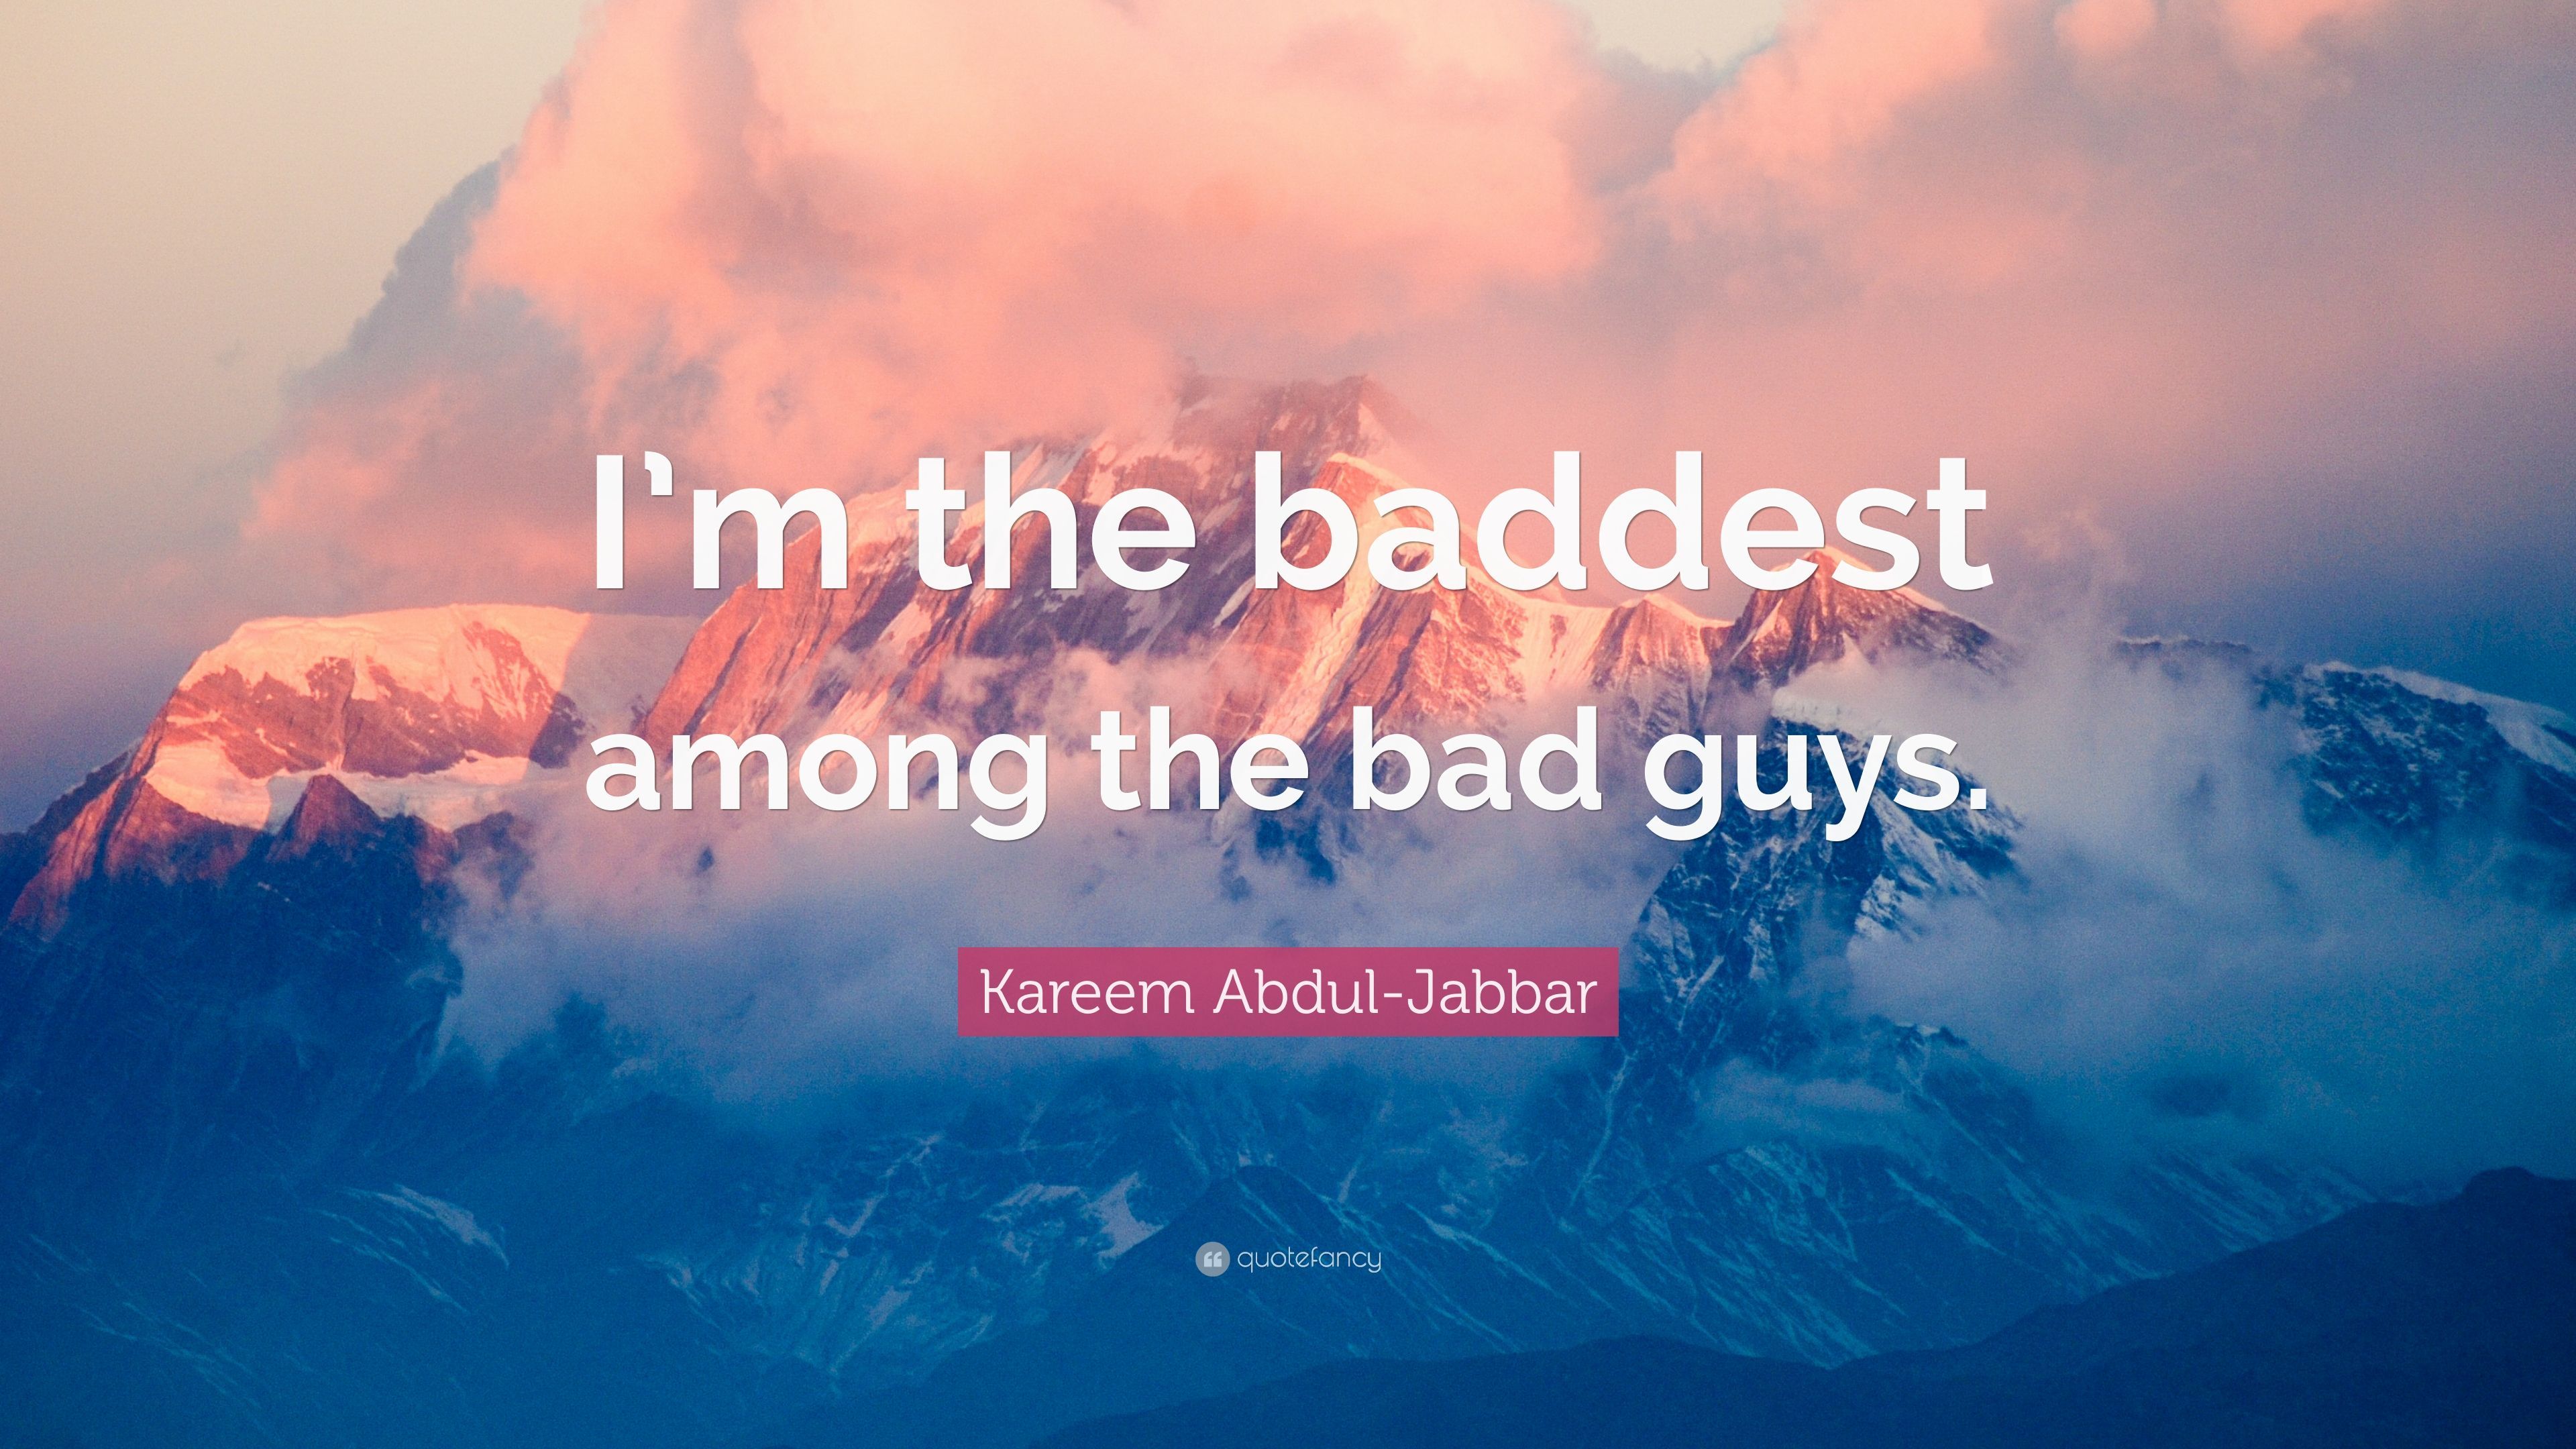 Kareem Abdul Jabbar Quote: “I'm The Baddest Among The Bad Guys.” (7 Wallpaper)